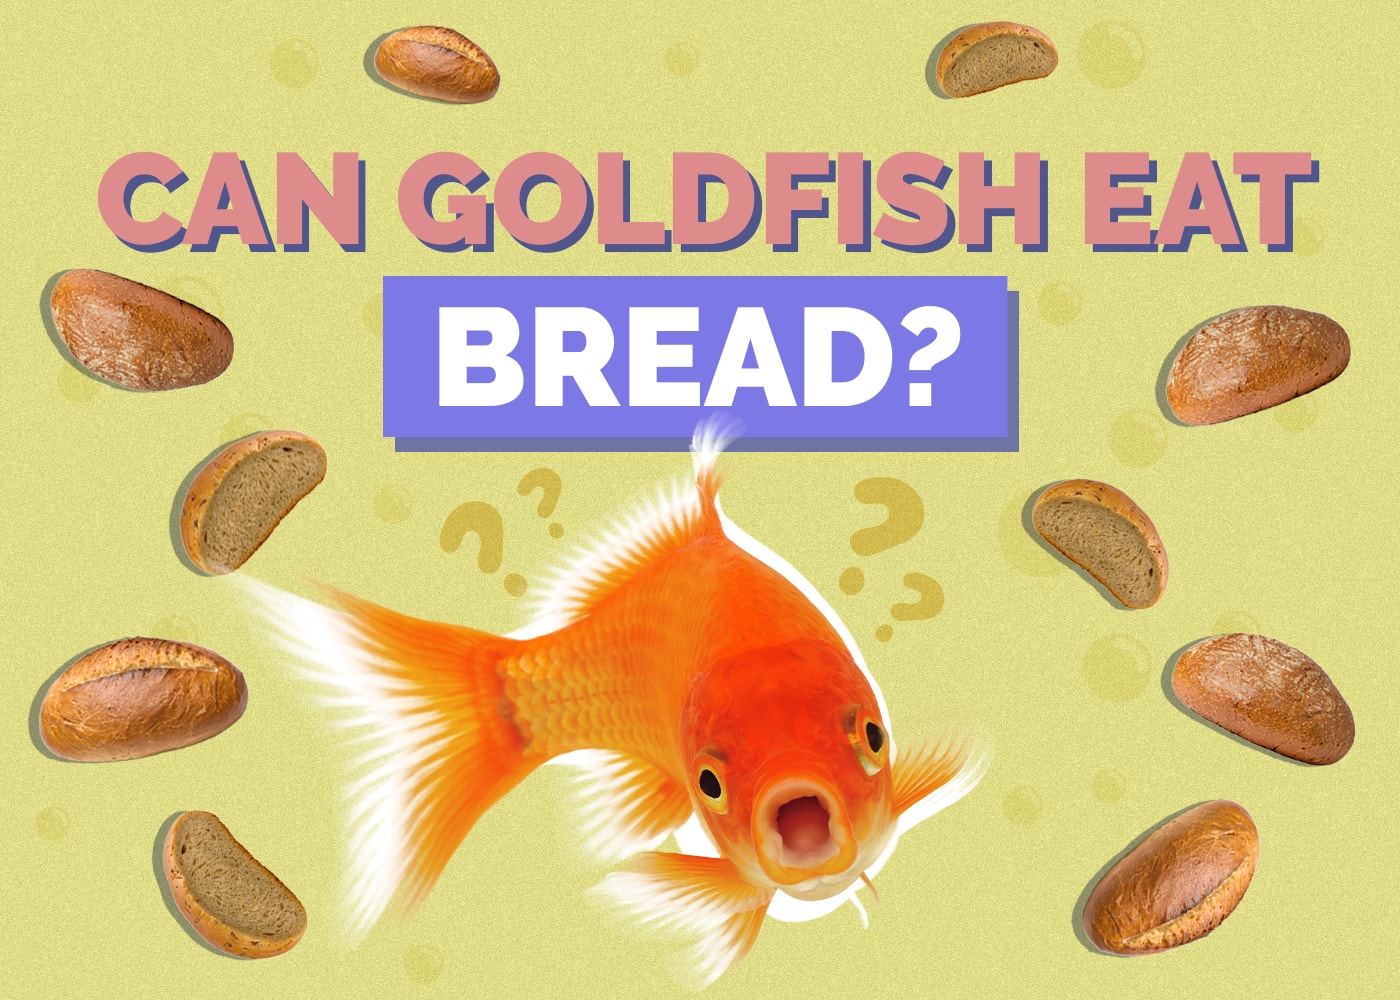 goldfish-bread